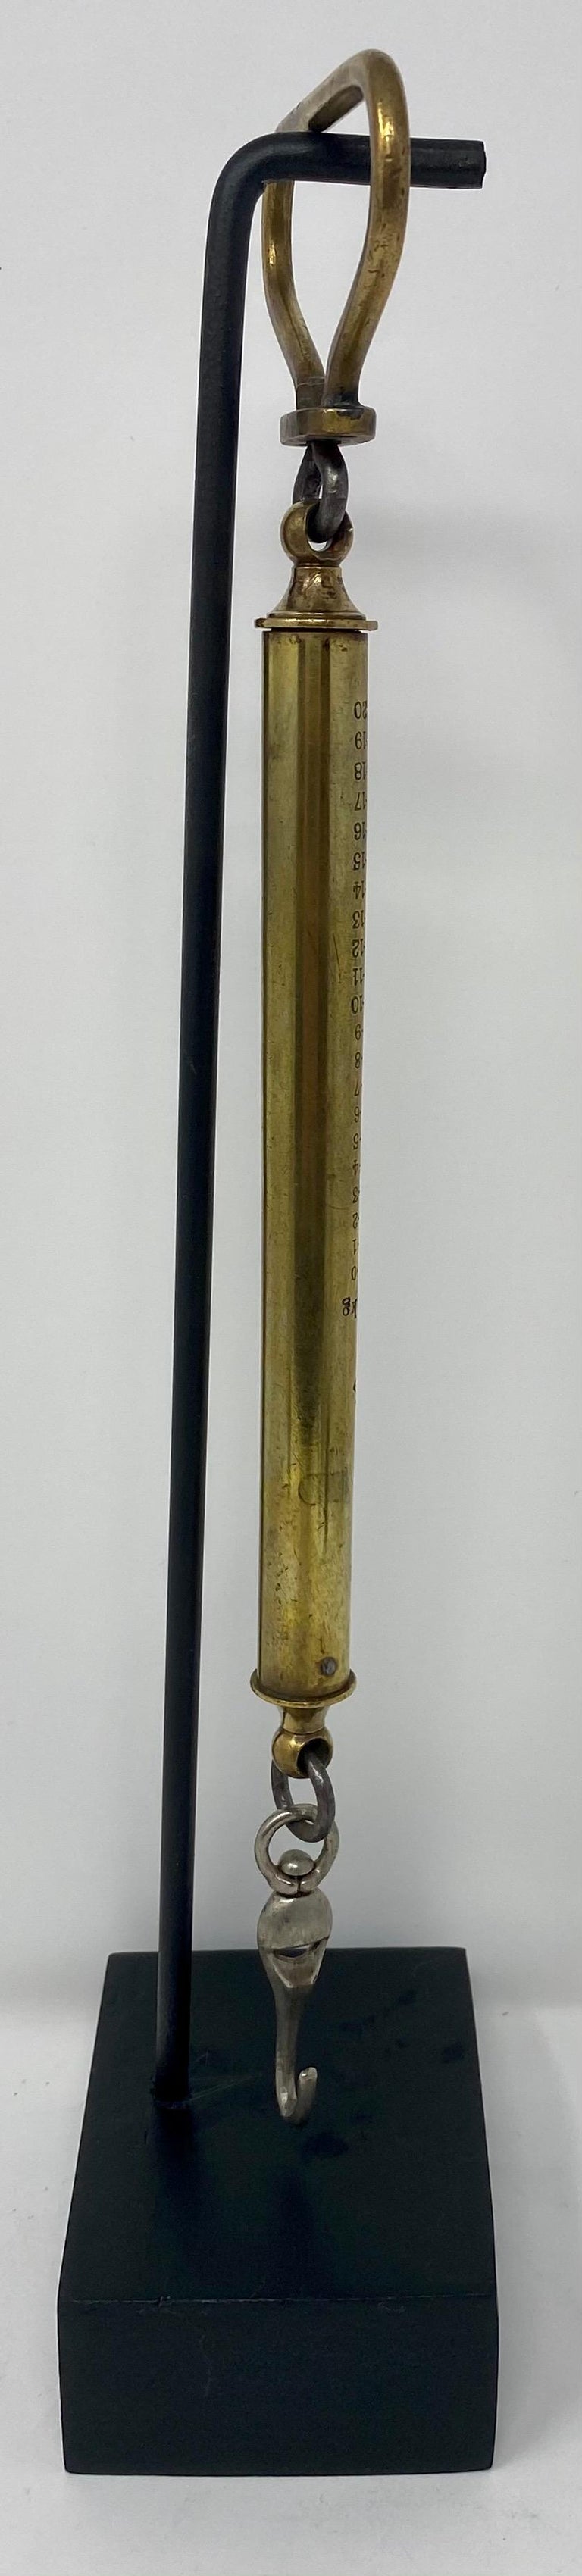 Antique English Brass Salter Scale